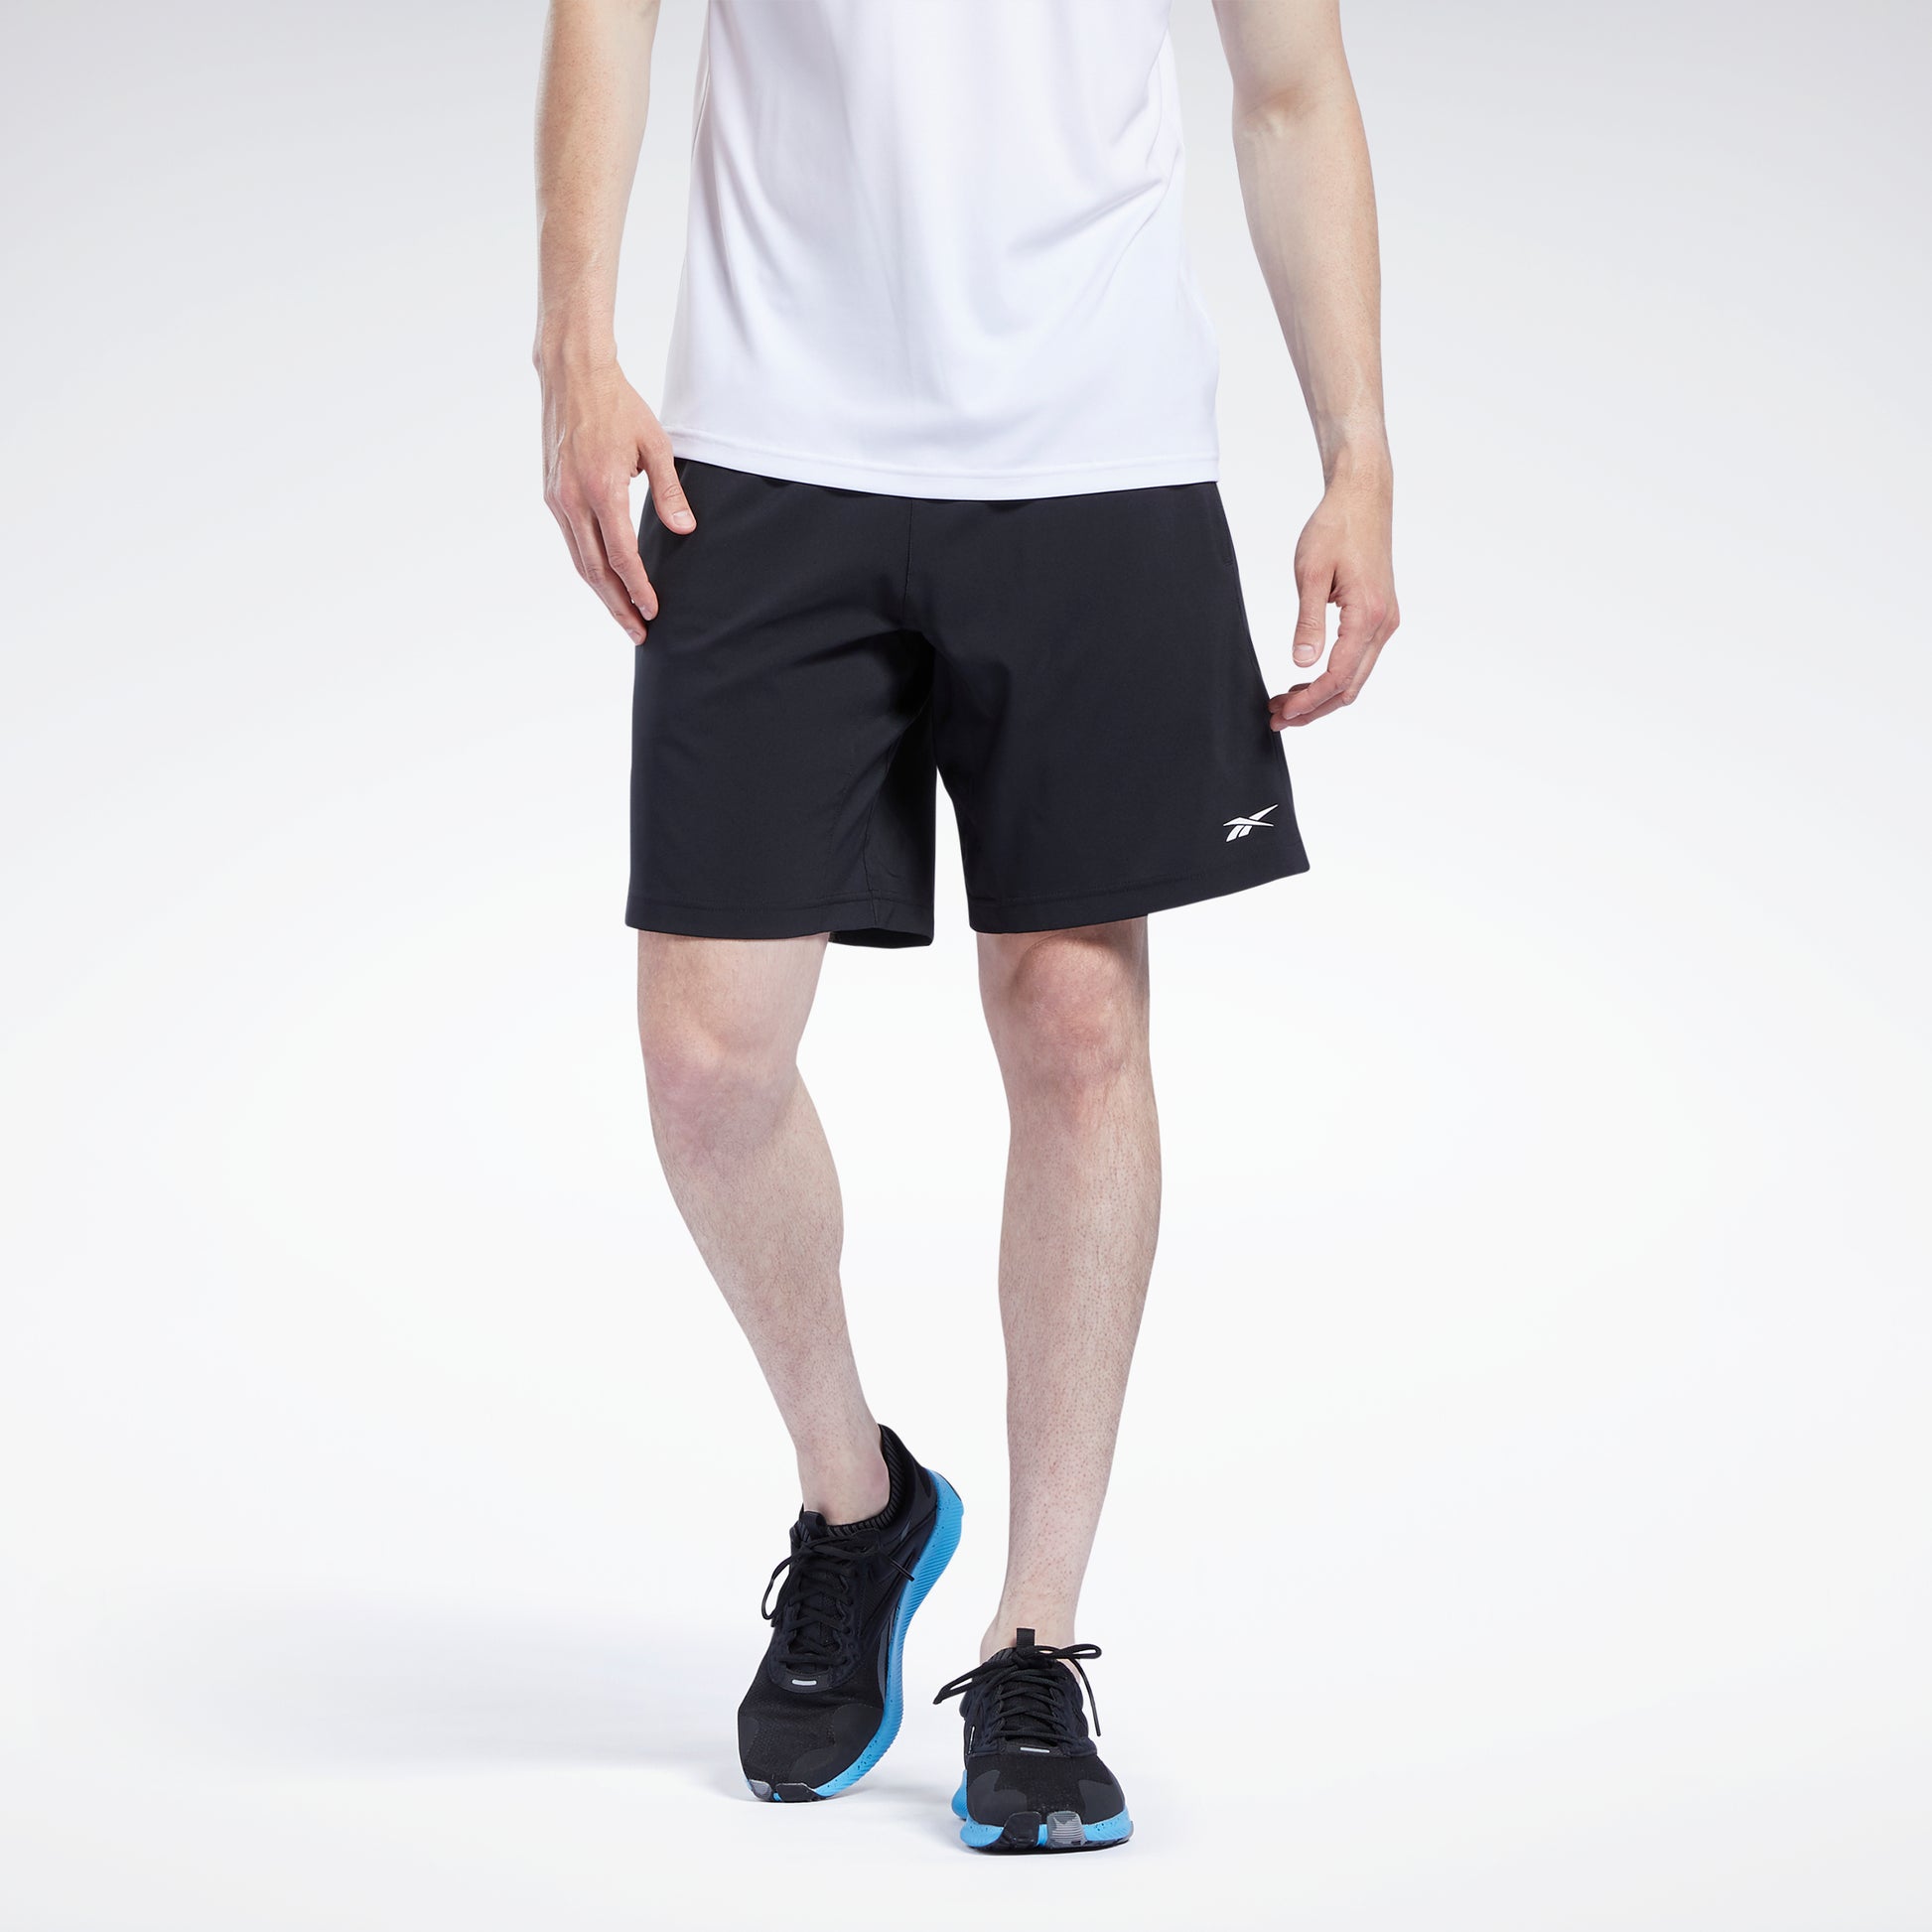 New Original Nike Youth Kids Dri-FIT Running Athletic Shorts - Large -  White